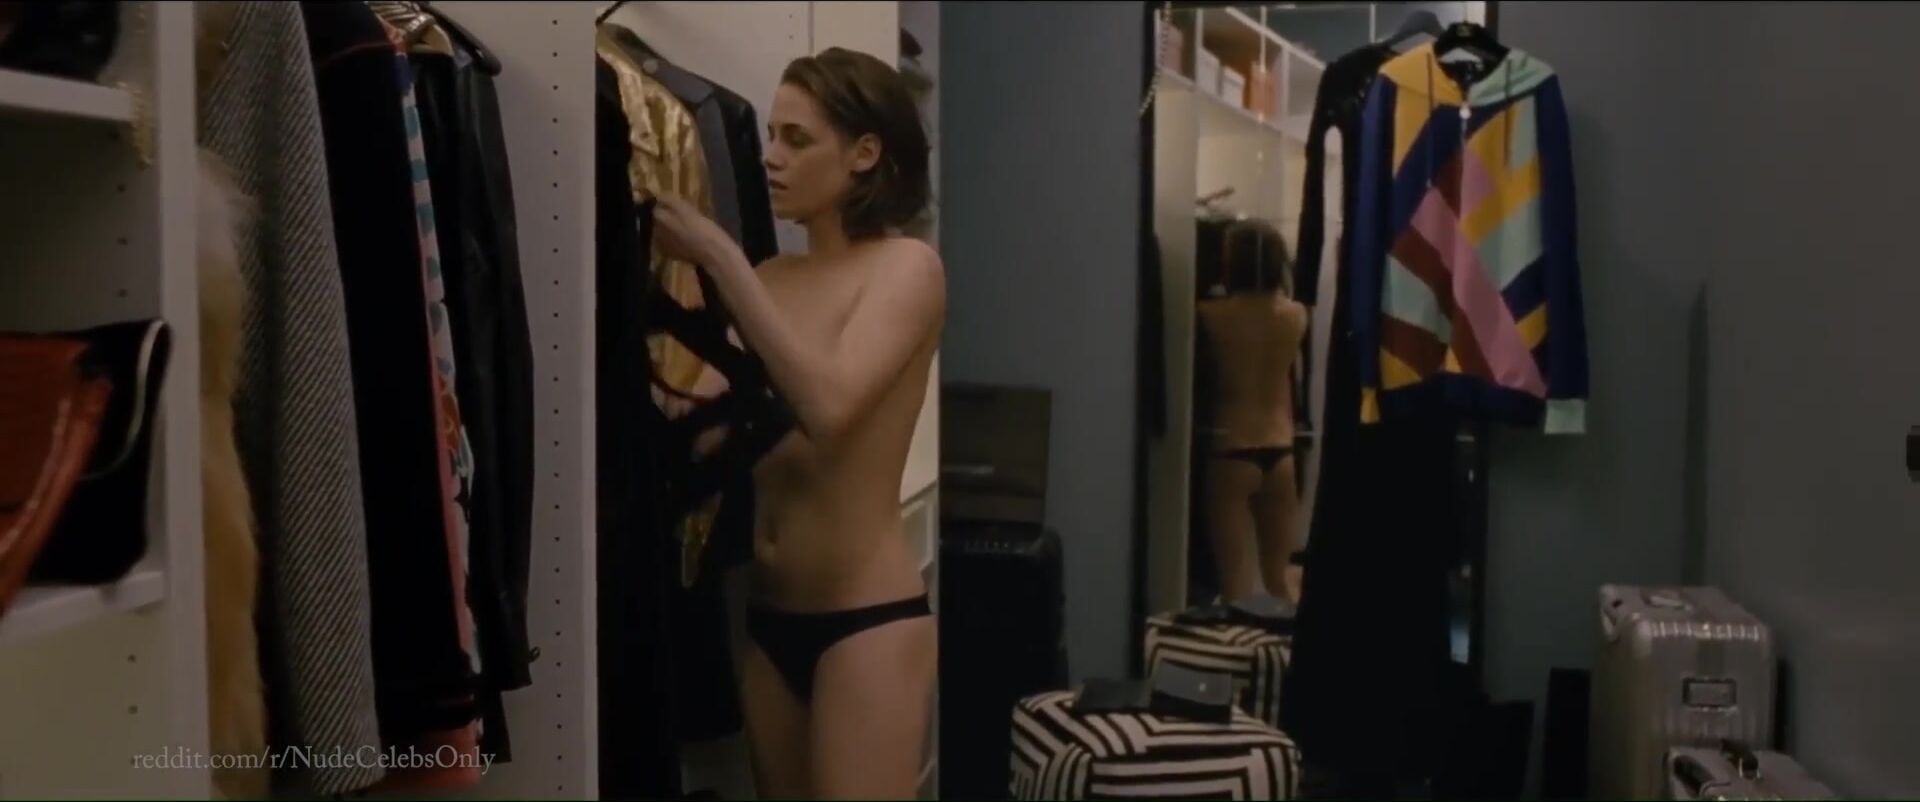 Freak Celebs video HD compilation of hot movie star Kristen Stewart starring in the nude Kink